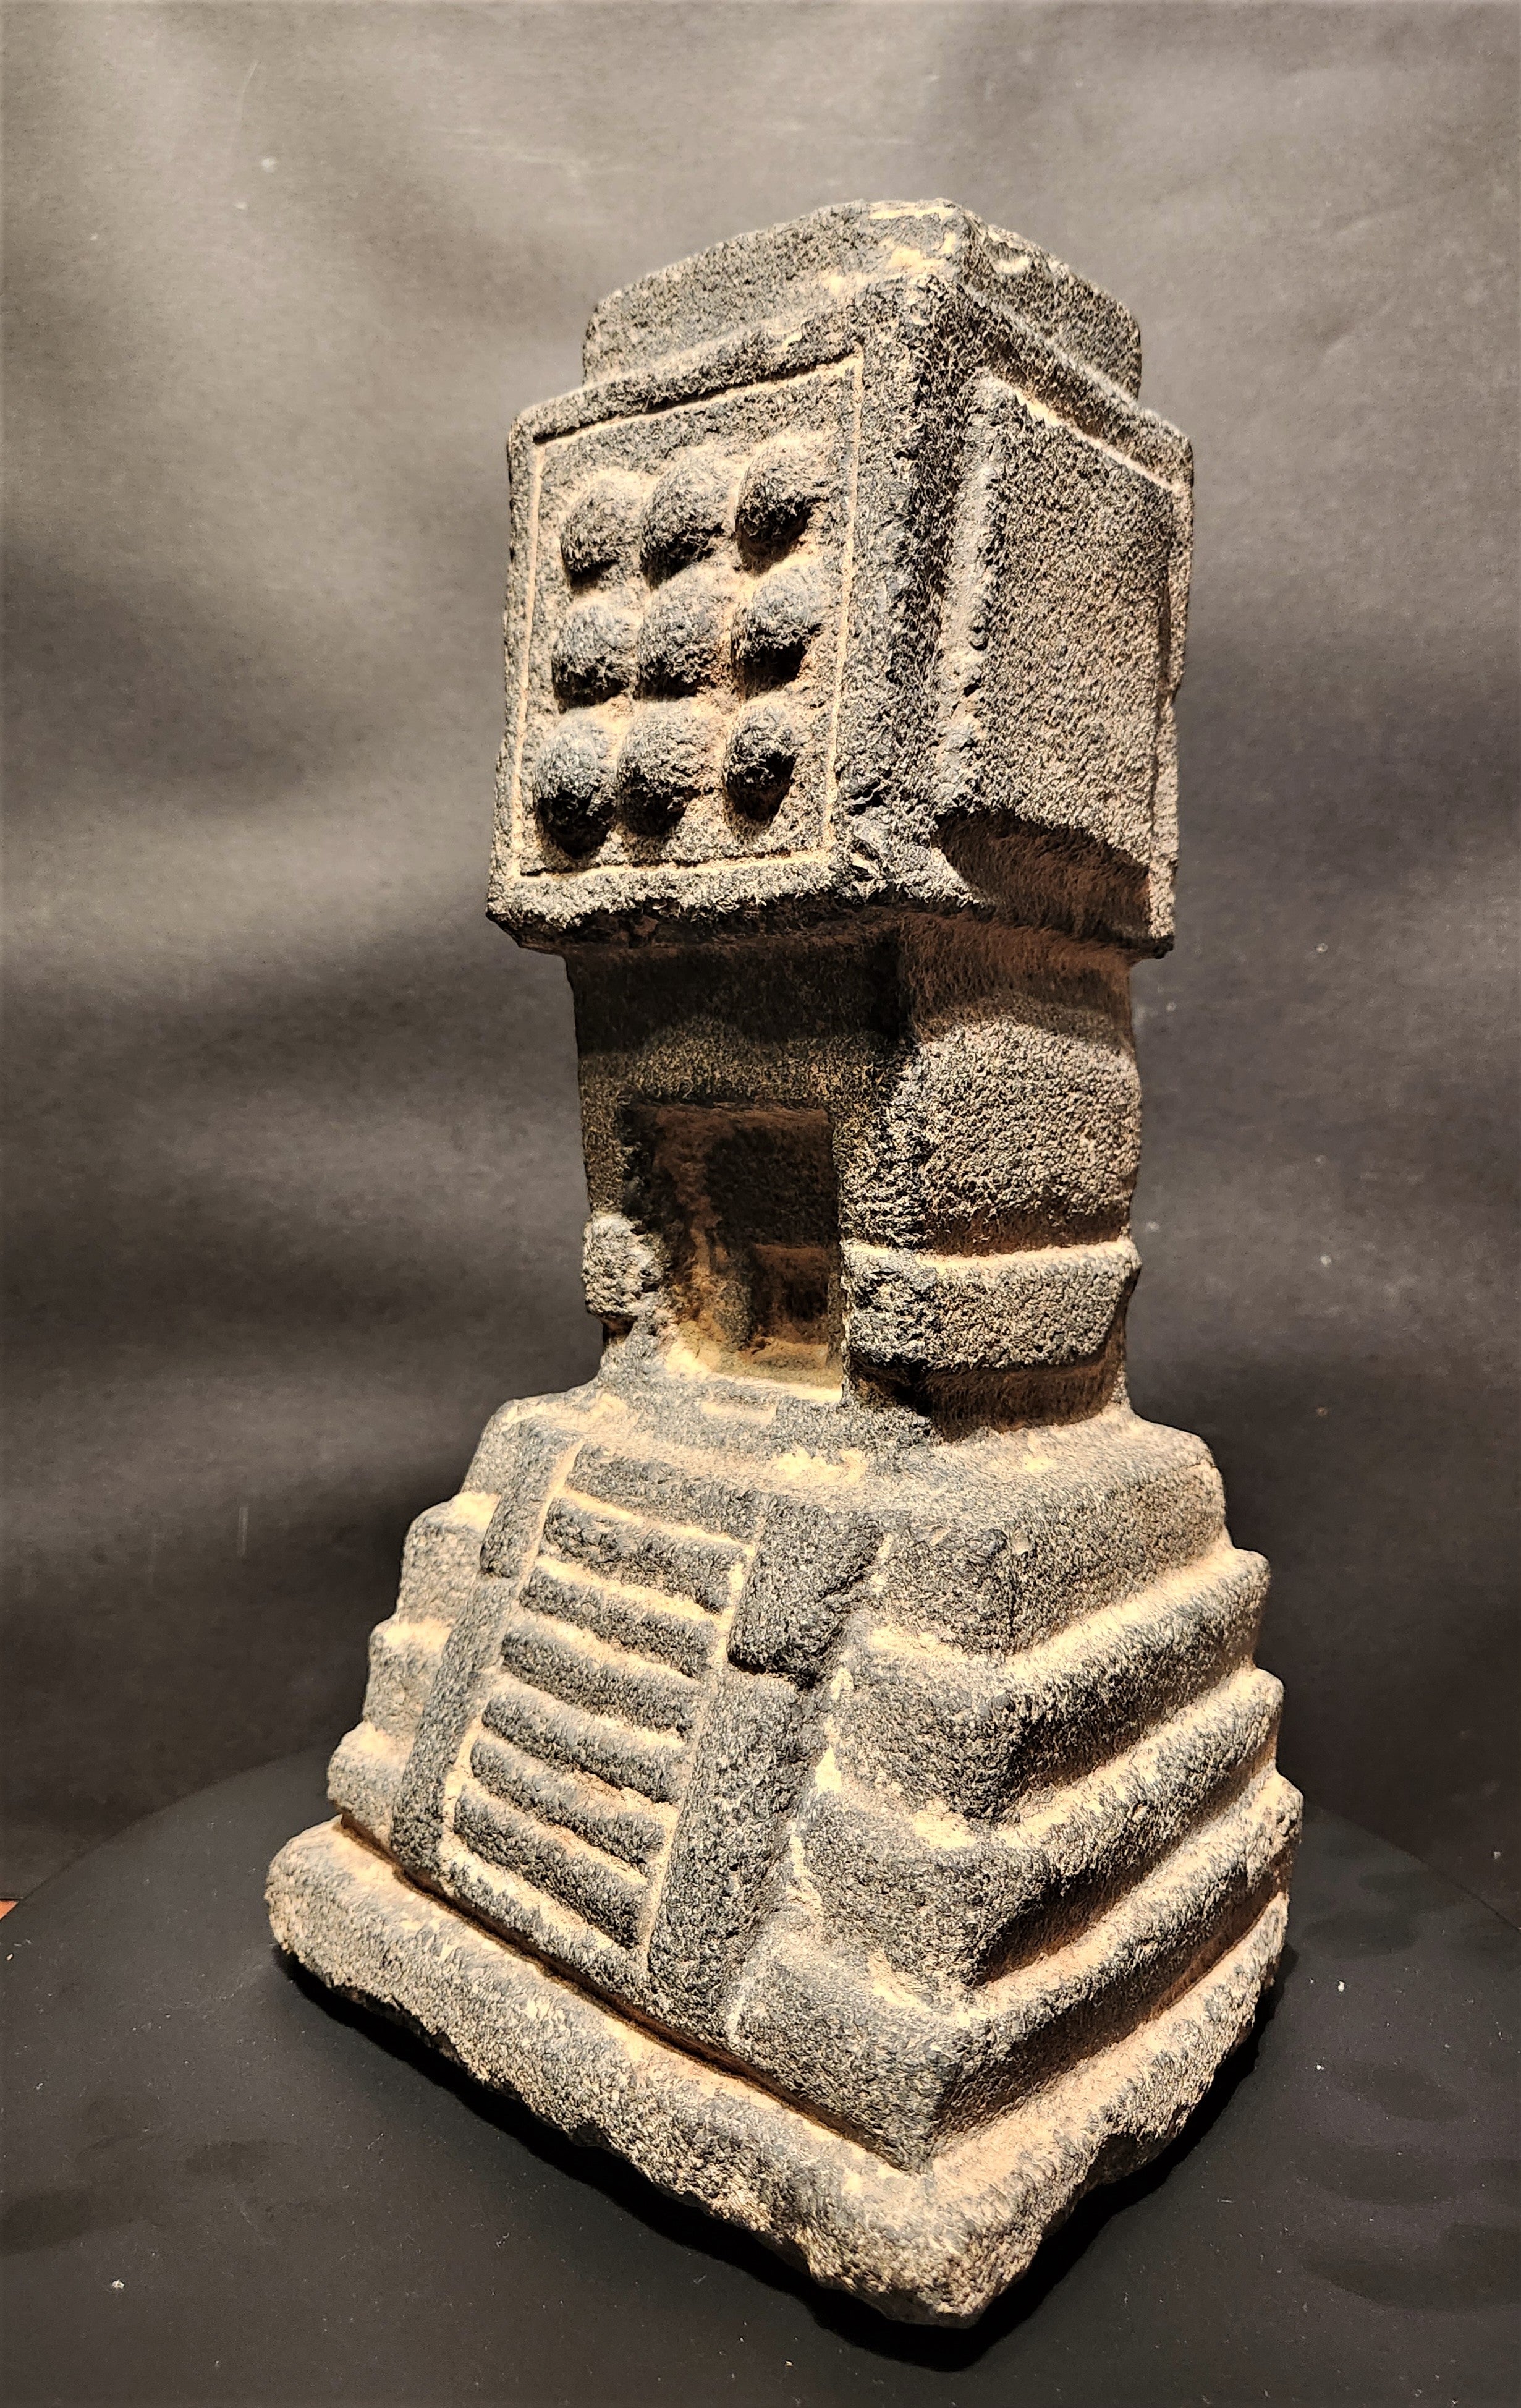 Exceedingly Rare Aztec 15th/16th Century Temple Model w/ Pre-1970 Provenance